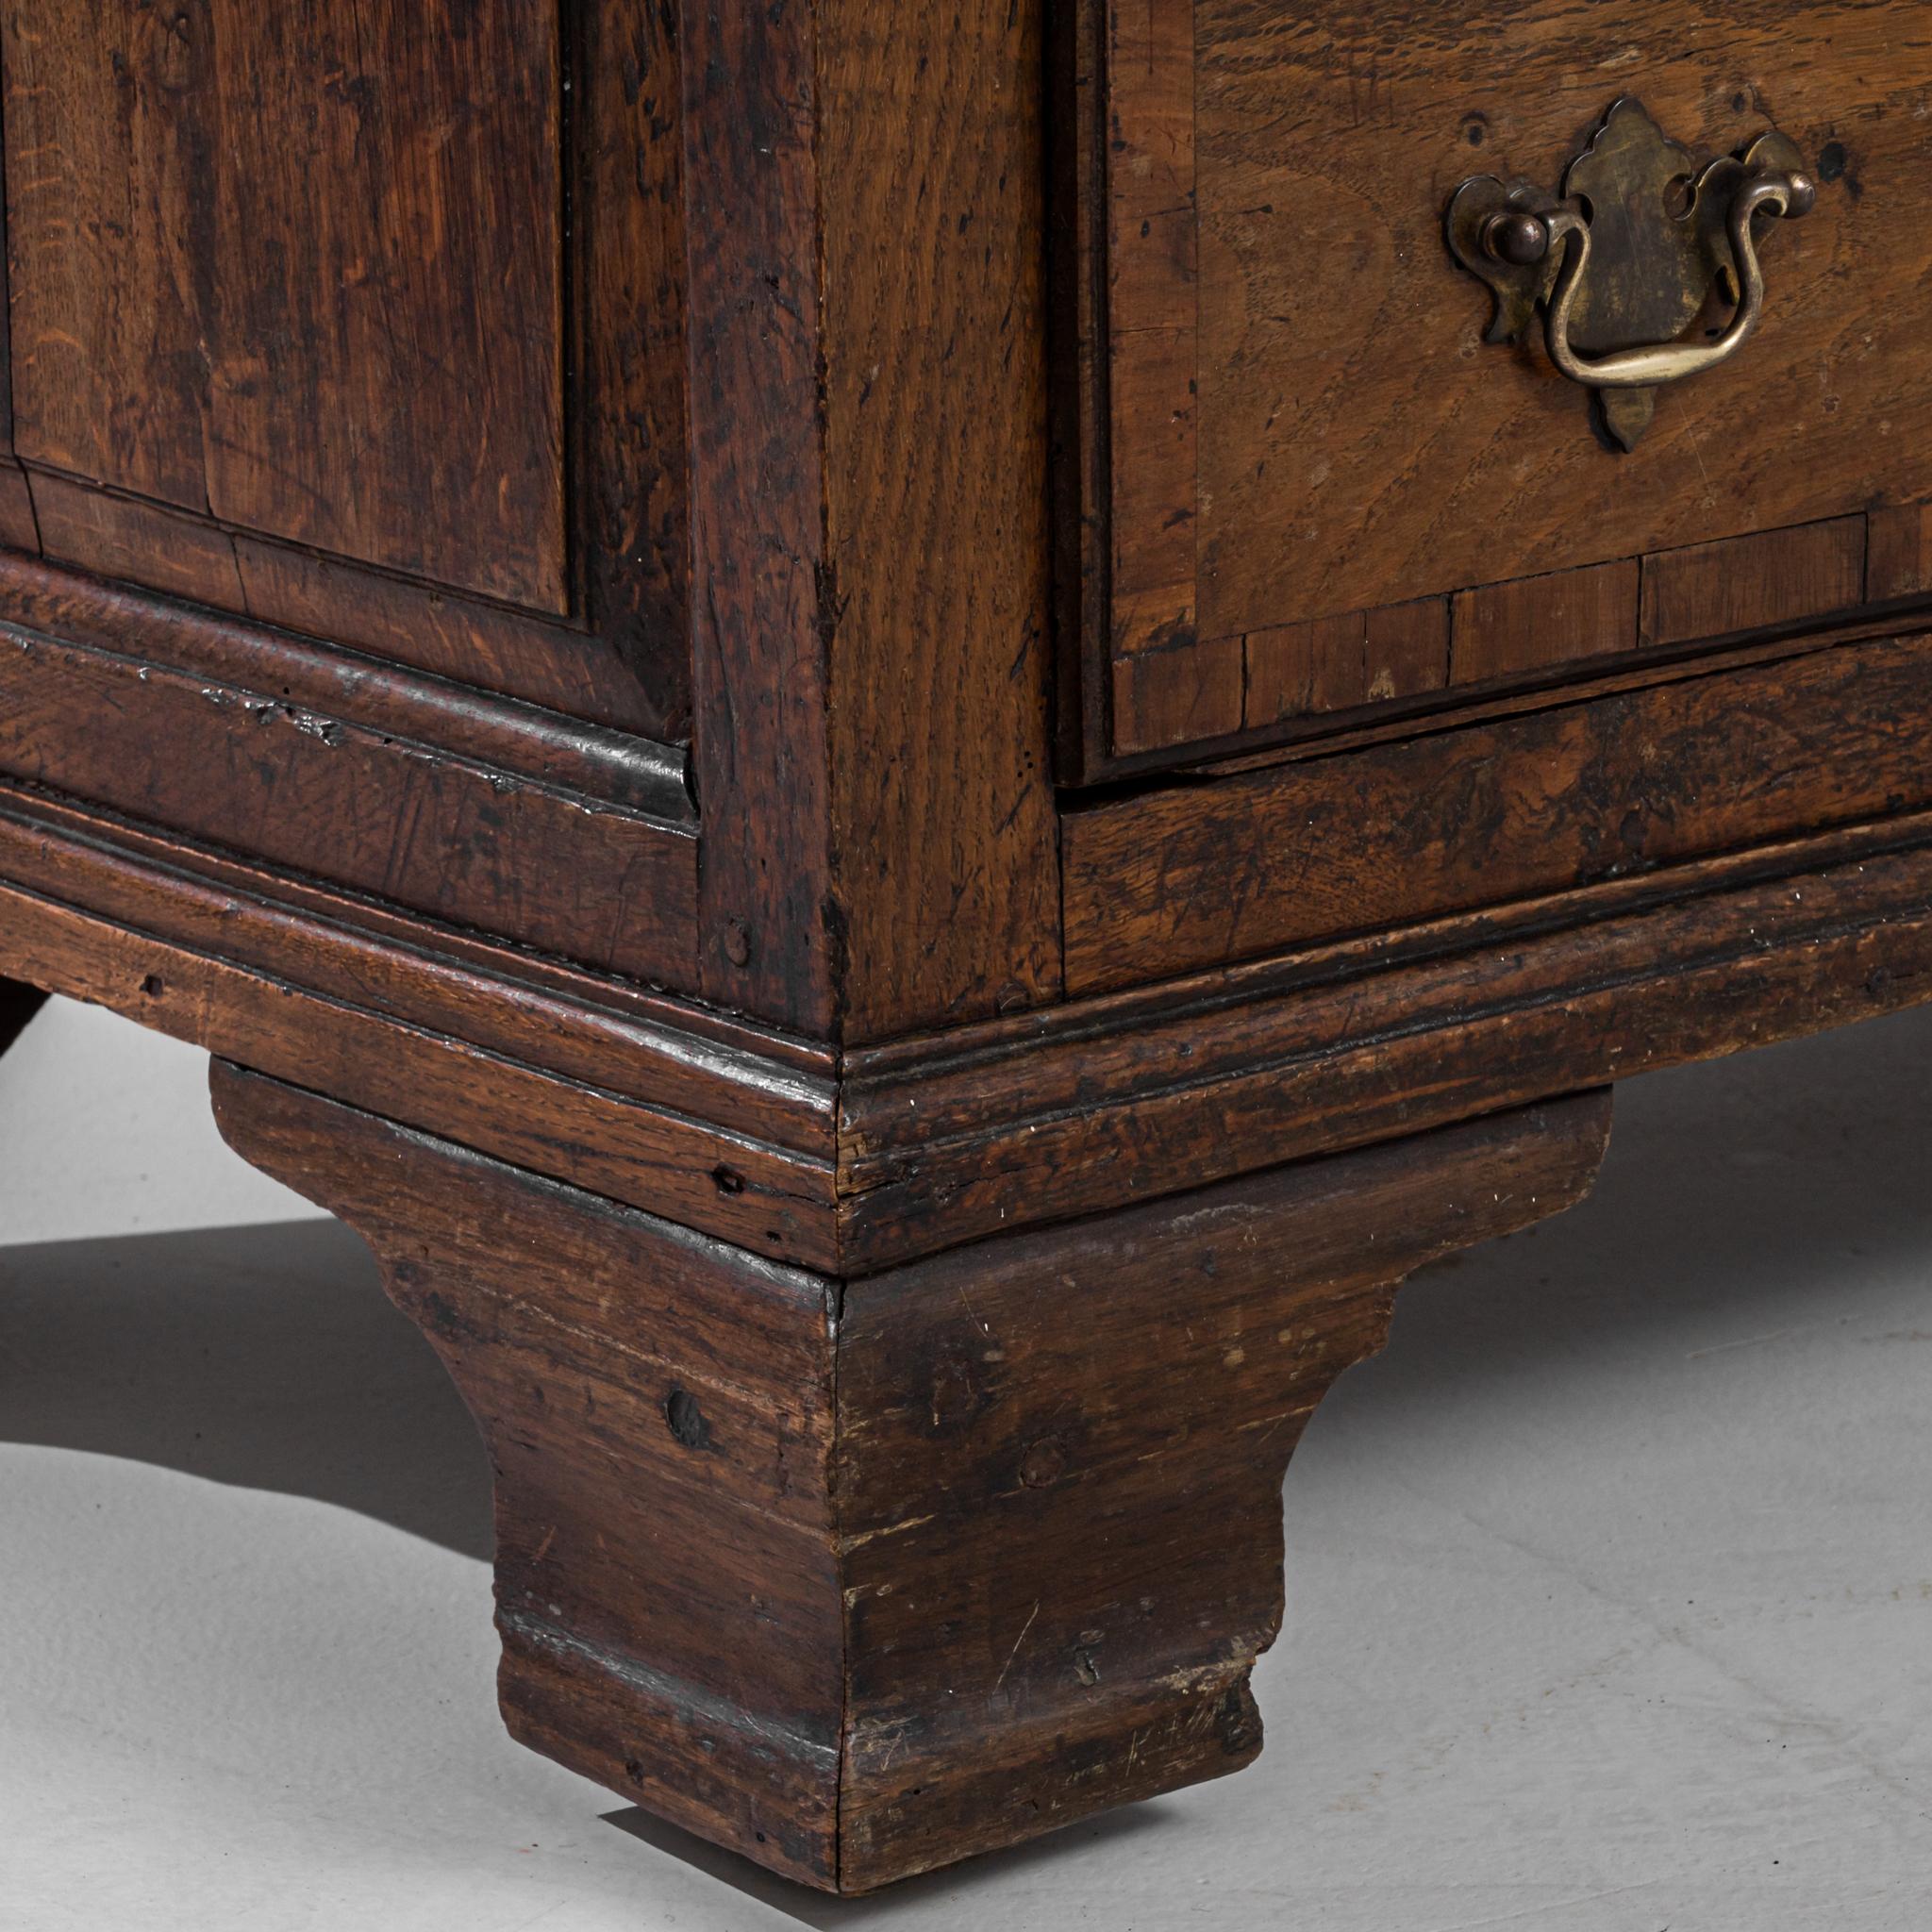 1870s British Wooden Cabinet with Original Patina 1